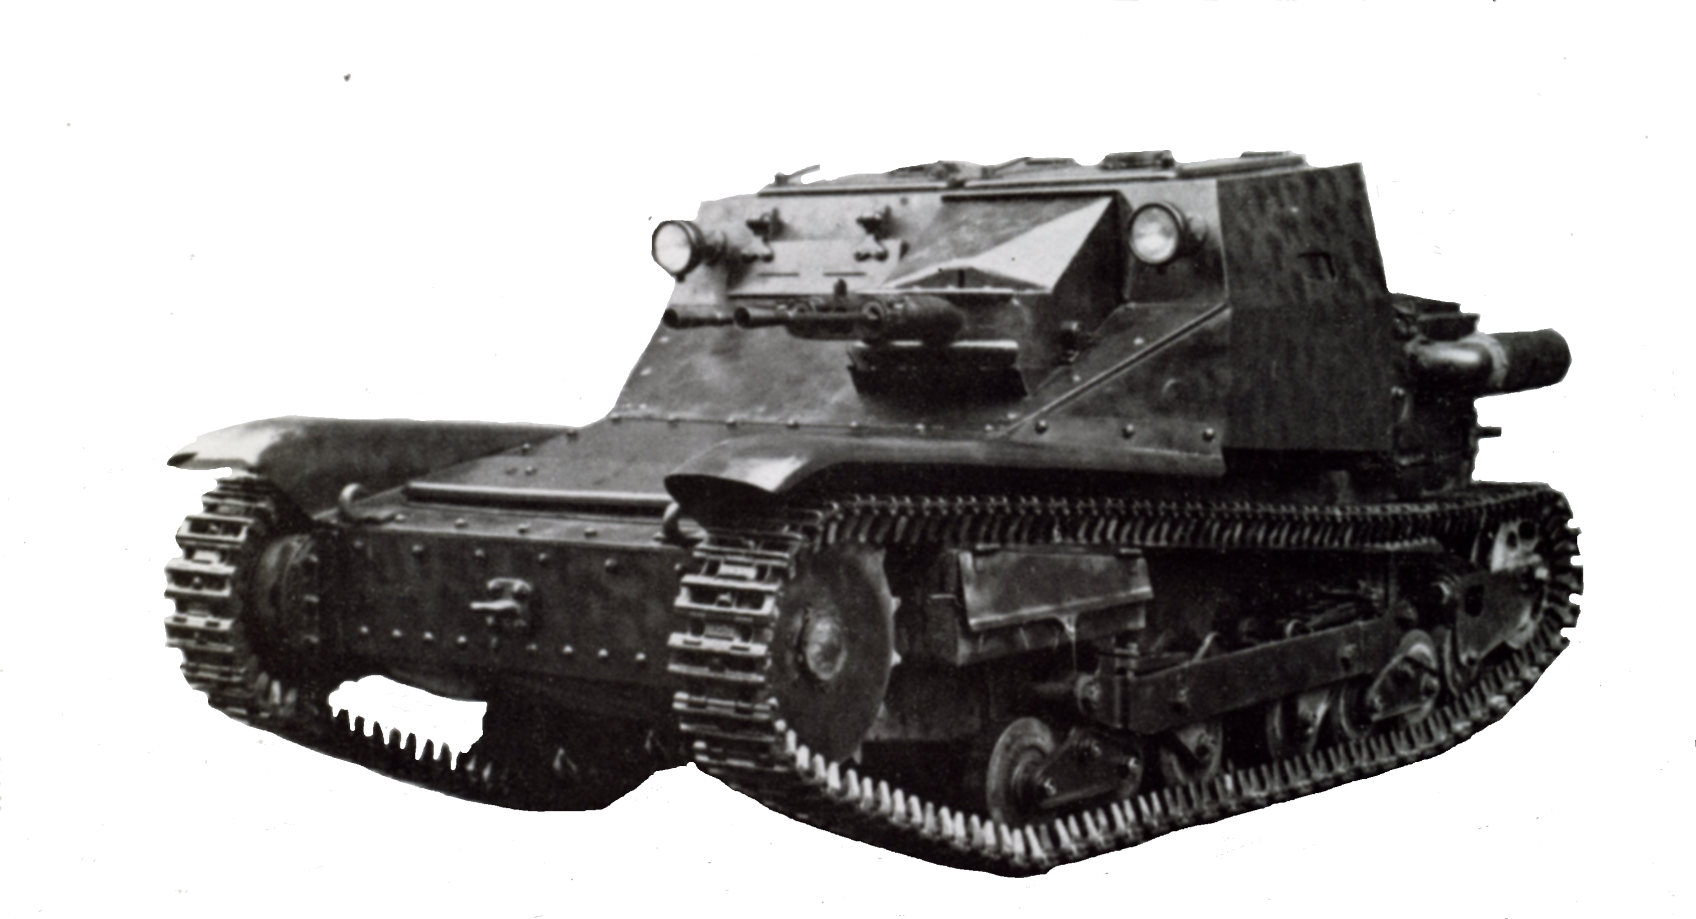 L 33 3. CV 3/35 Фиат-Ансальдо. Итальянская танкетка l3 (cv3/33). Итальянские танкетки carro cv3/33. Танкетка Fiat-Ansaldo CV-35.